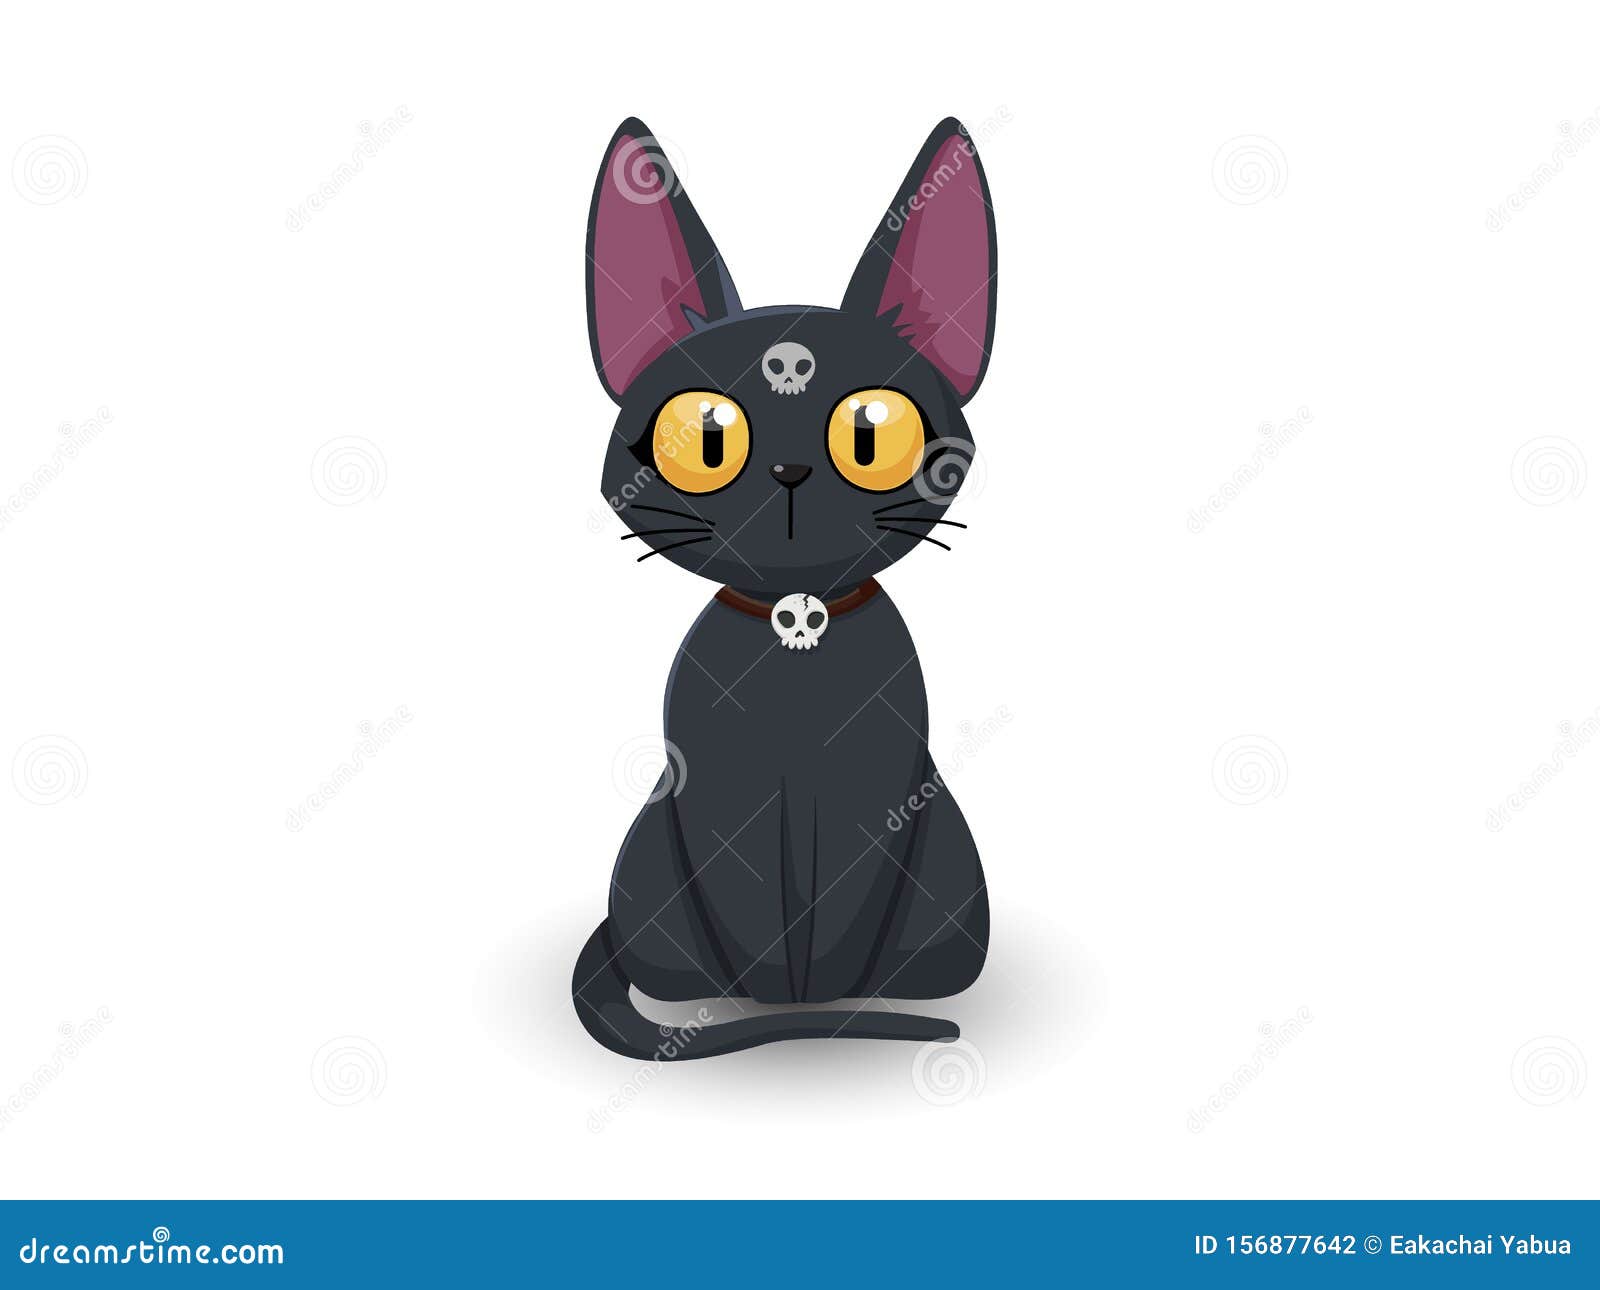 Halloween Cartoon Black Cat. Concept Animal Cat Halloween Day Vector and  Illustration Art Design Stock Vector - Illustration of isolated, happy:  156877642